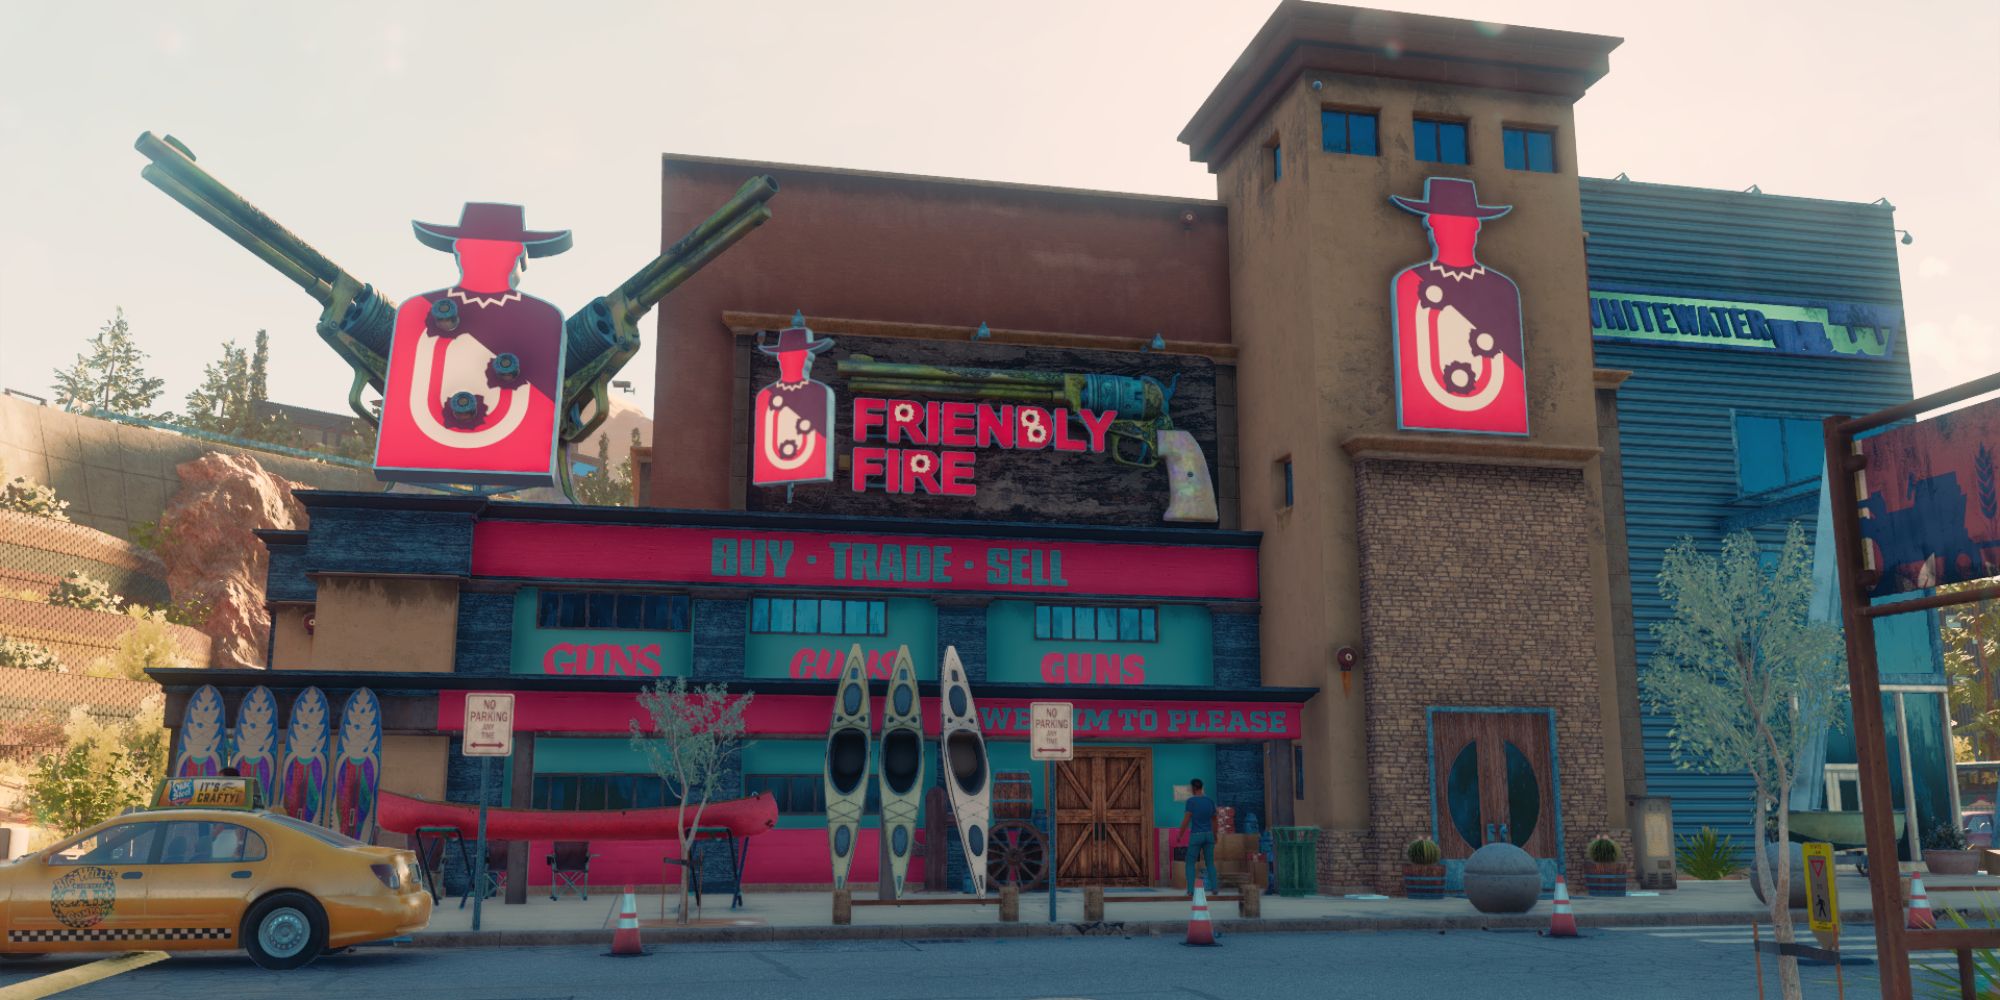 Saints Row Screenshot Of Friendly Fire Store